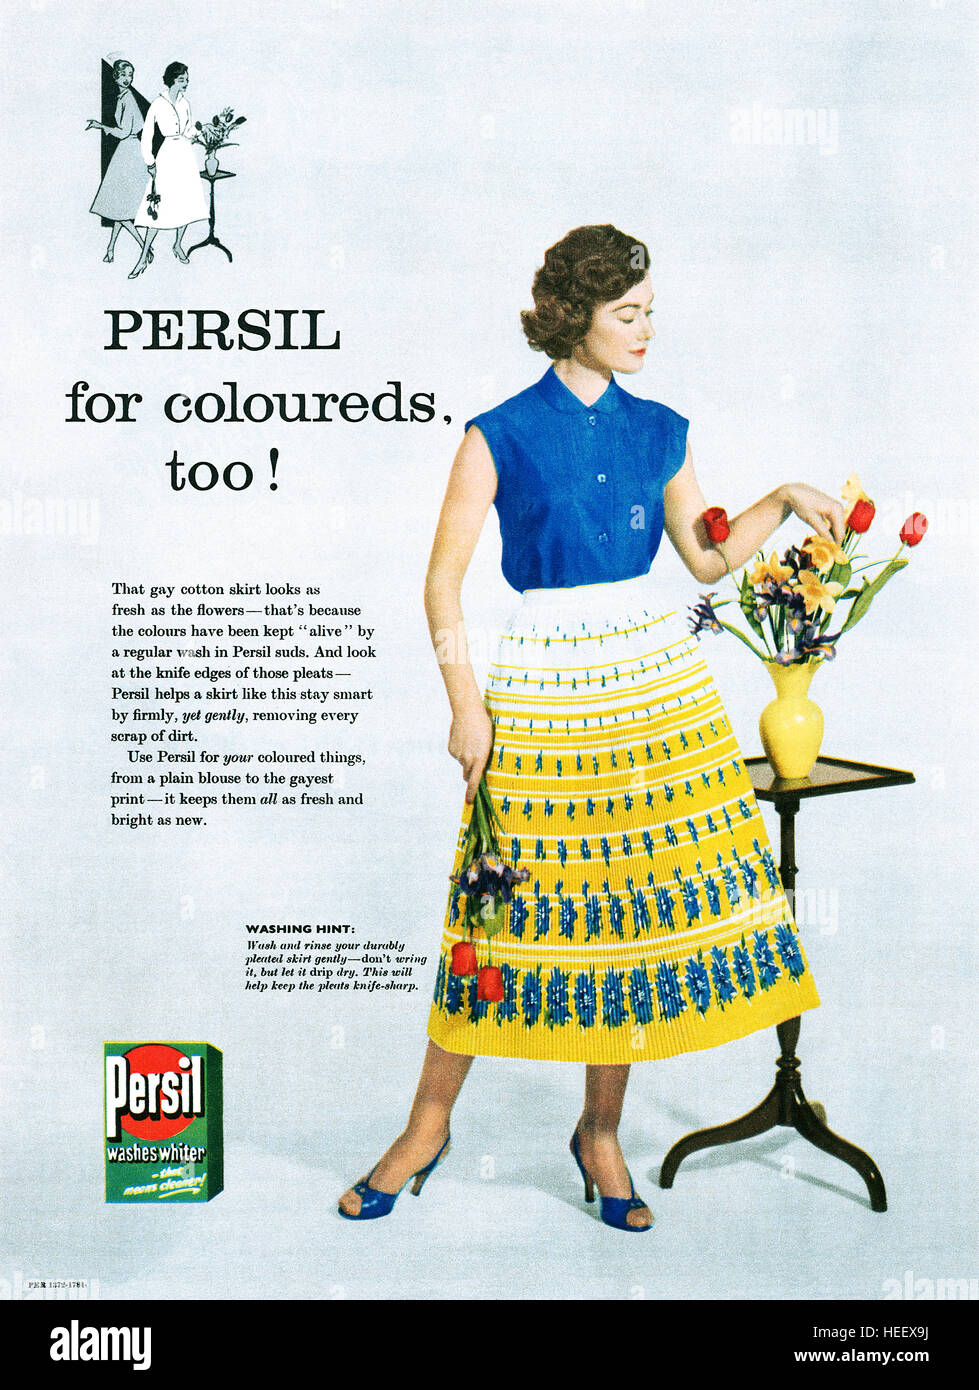 1957 British advertisement for Persil Washing Powder Stock Photo